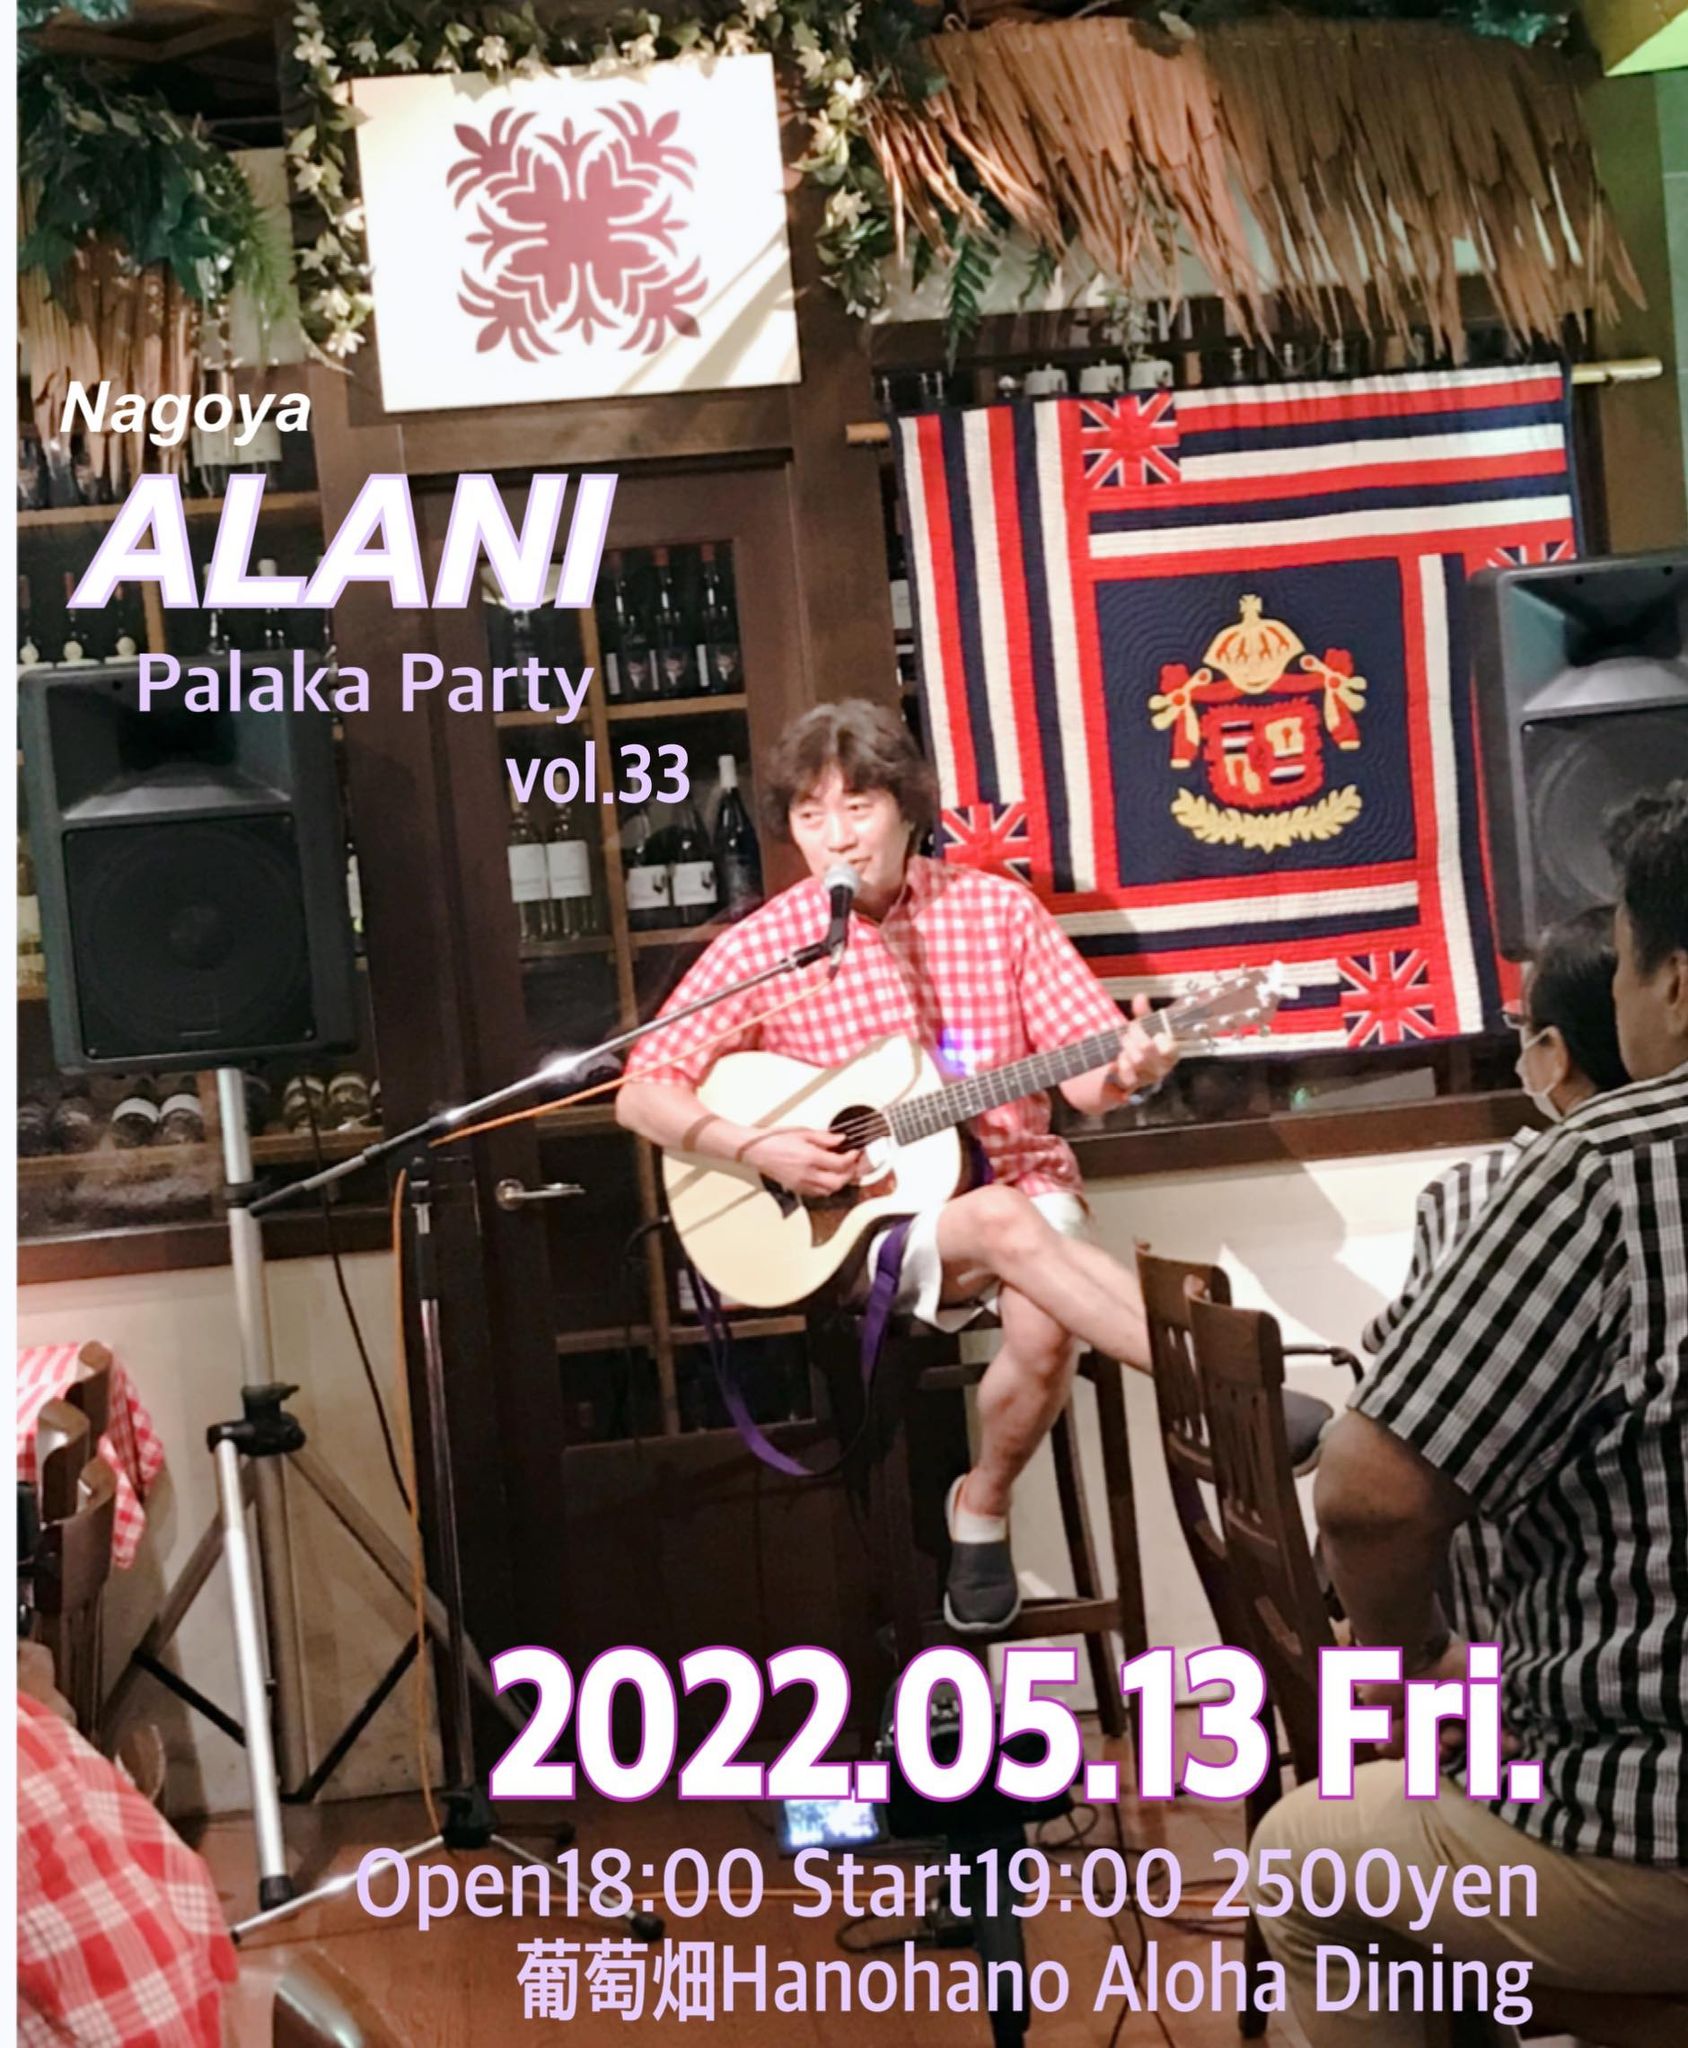 愛知 第26回 Palaka Party in 名古屋 @ 葡萄畑 Hanohano Aloha Dining | 名古屋市 | 愛知県 | 日本